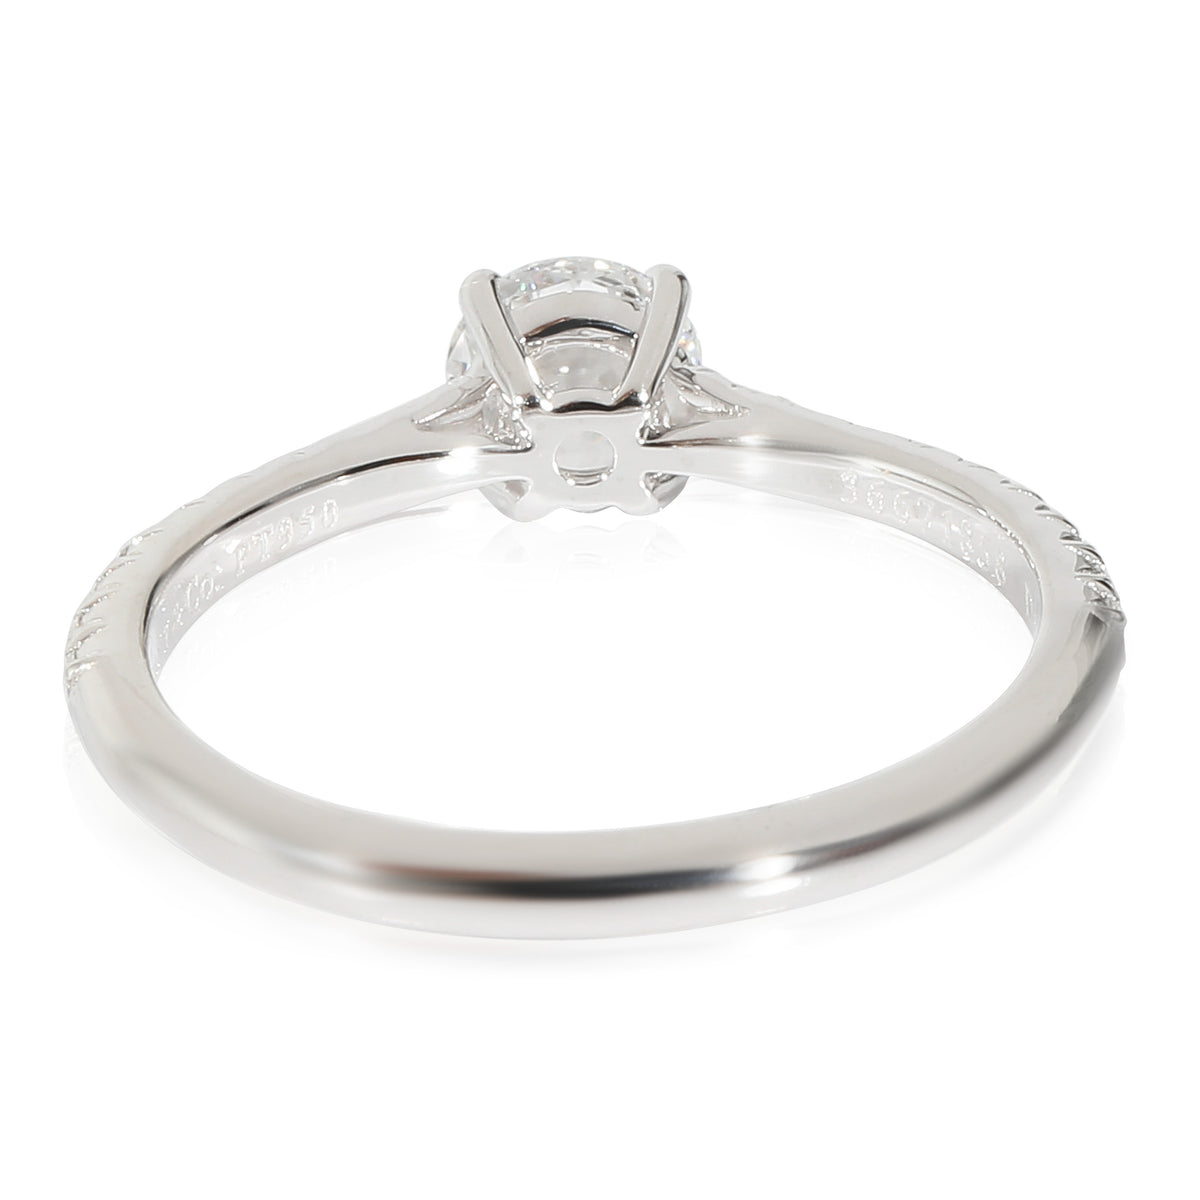 Tiffany Novo Diamond Engagement Ring in Platinum 0.69 Ctw